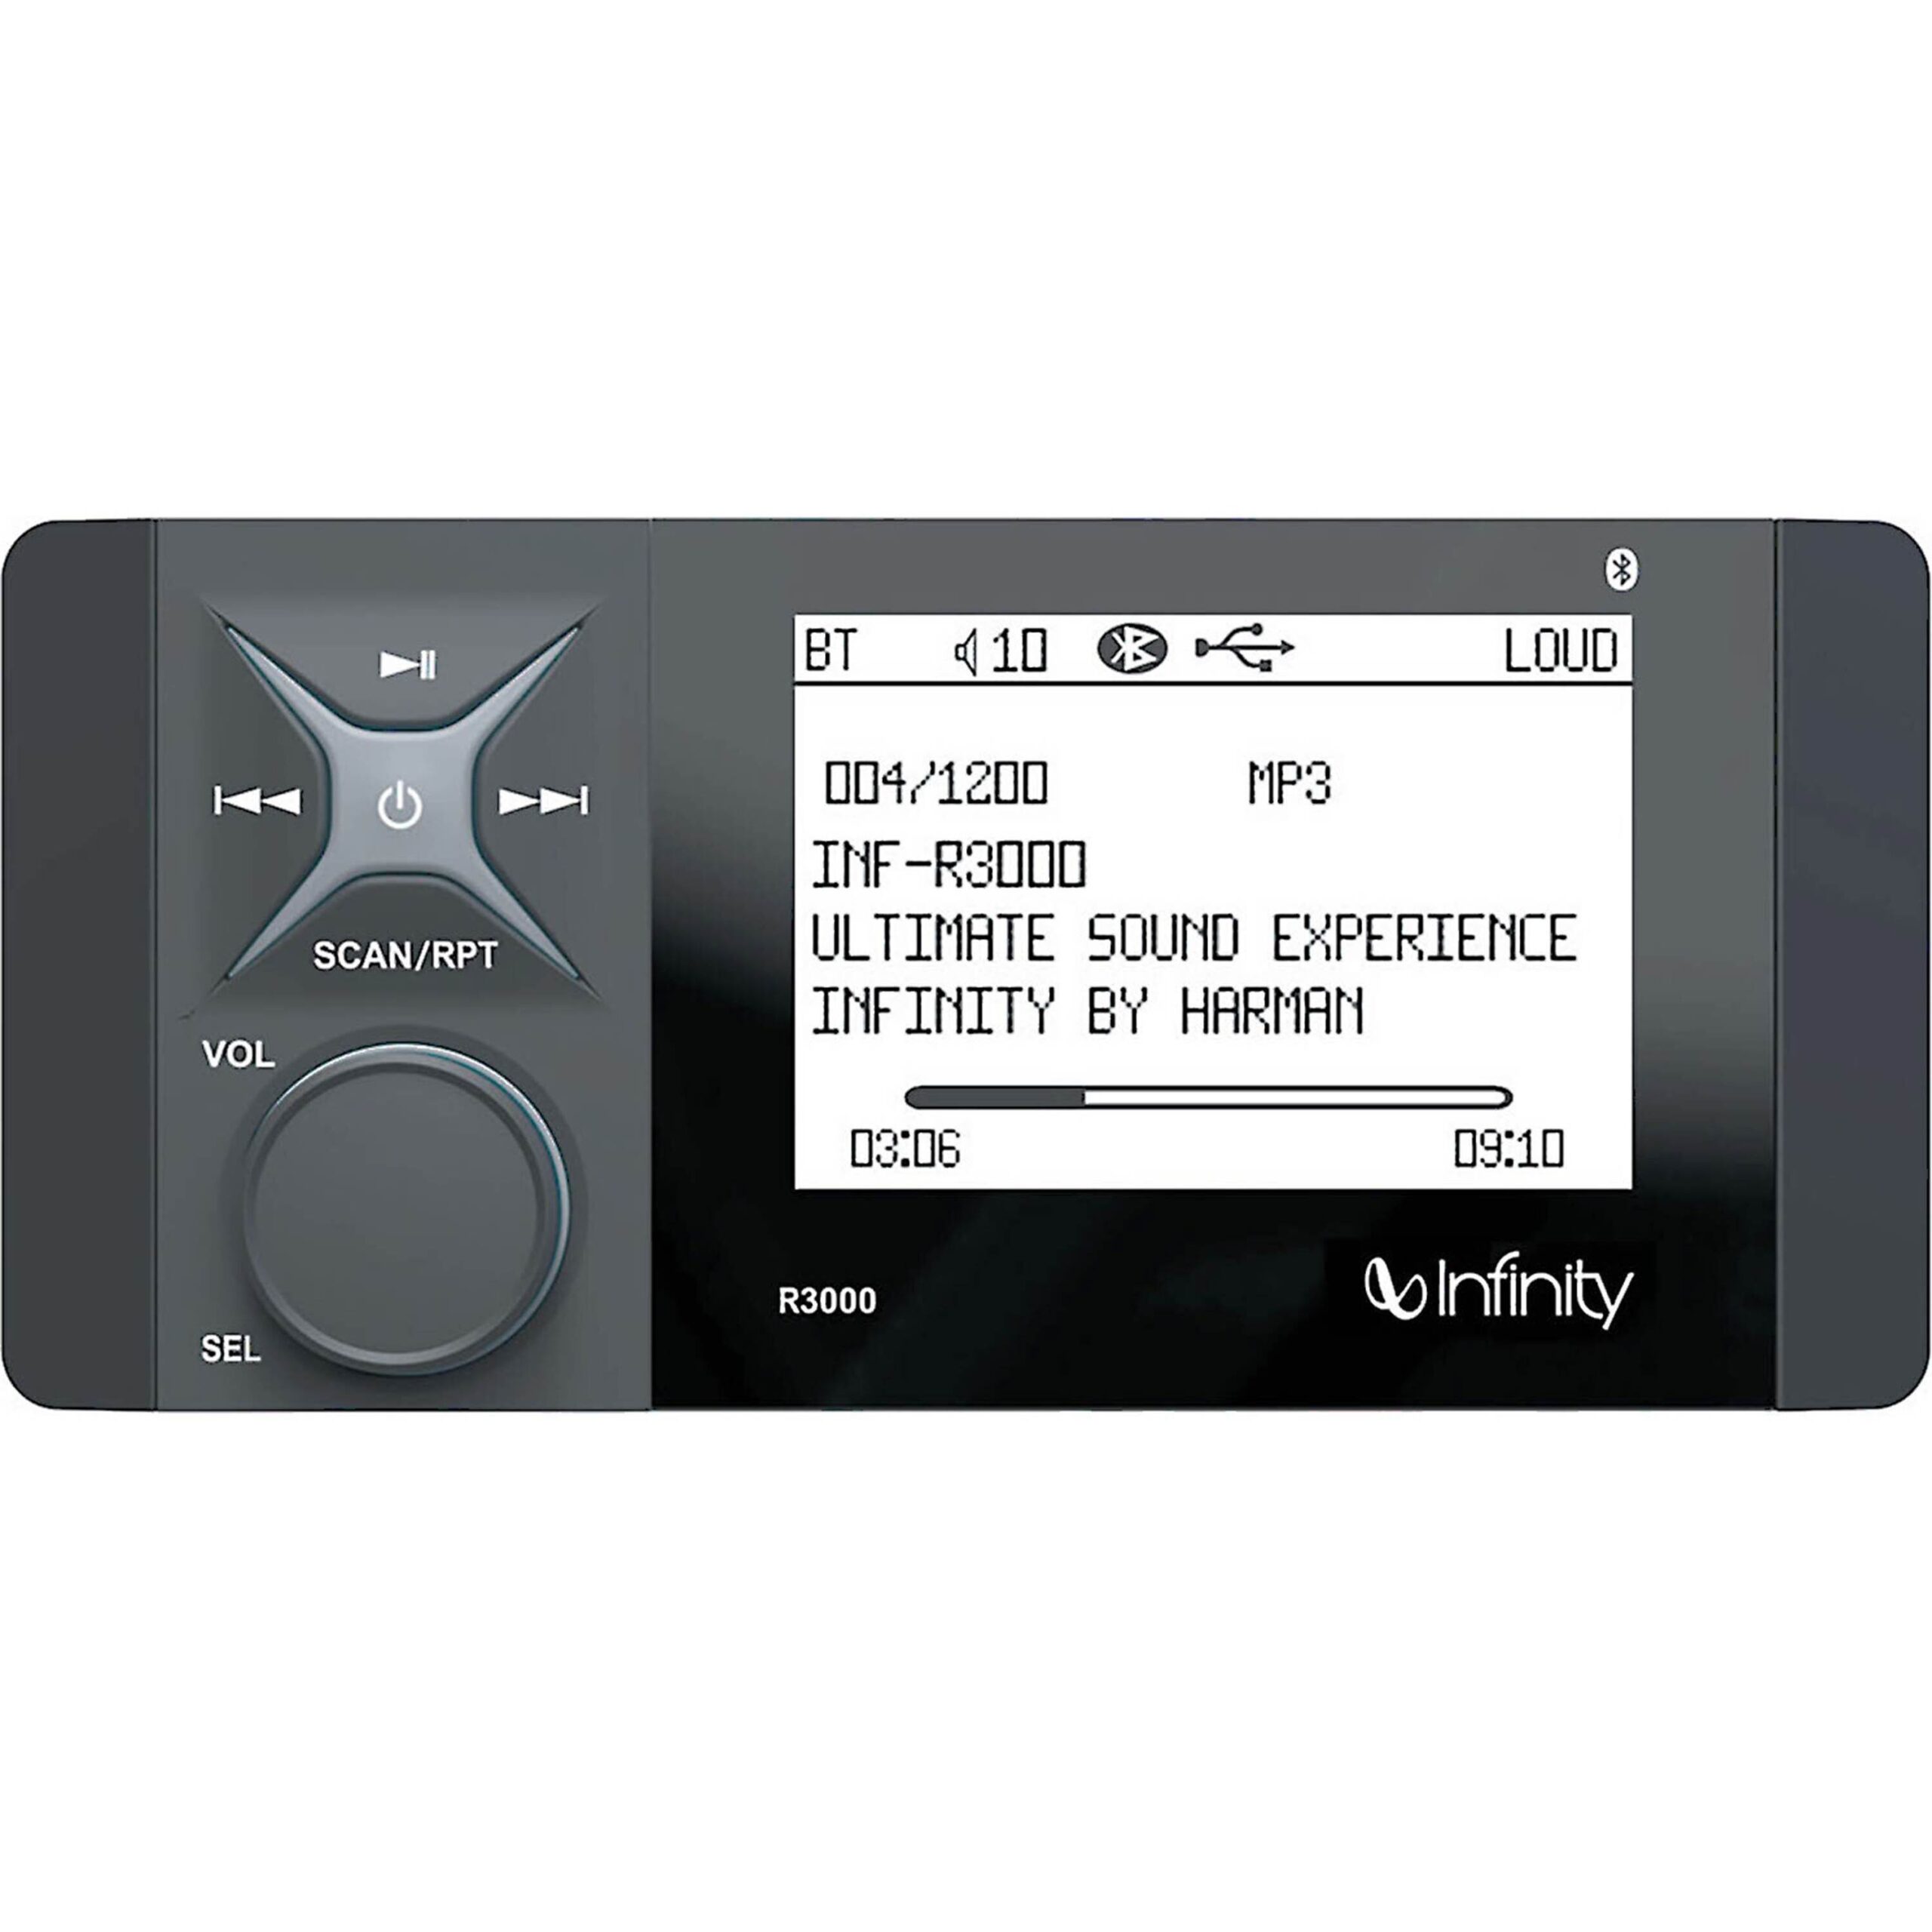 Marine AM/FM Radio with MP3 Player and Bluetooth